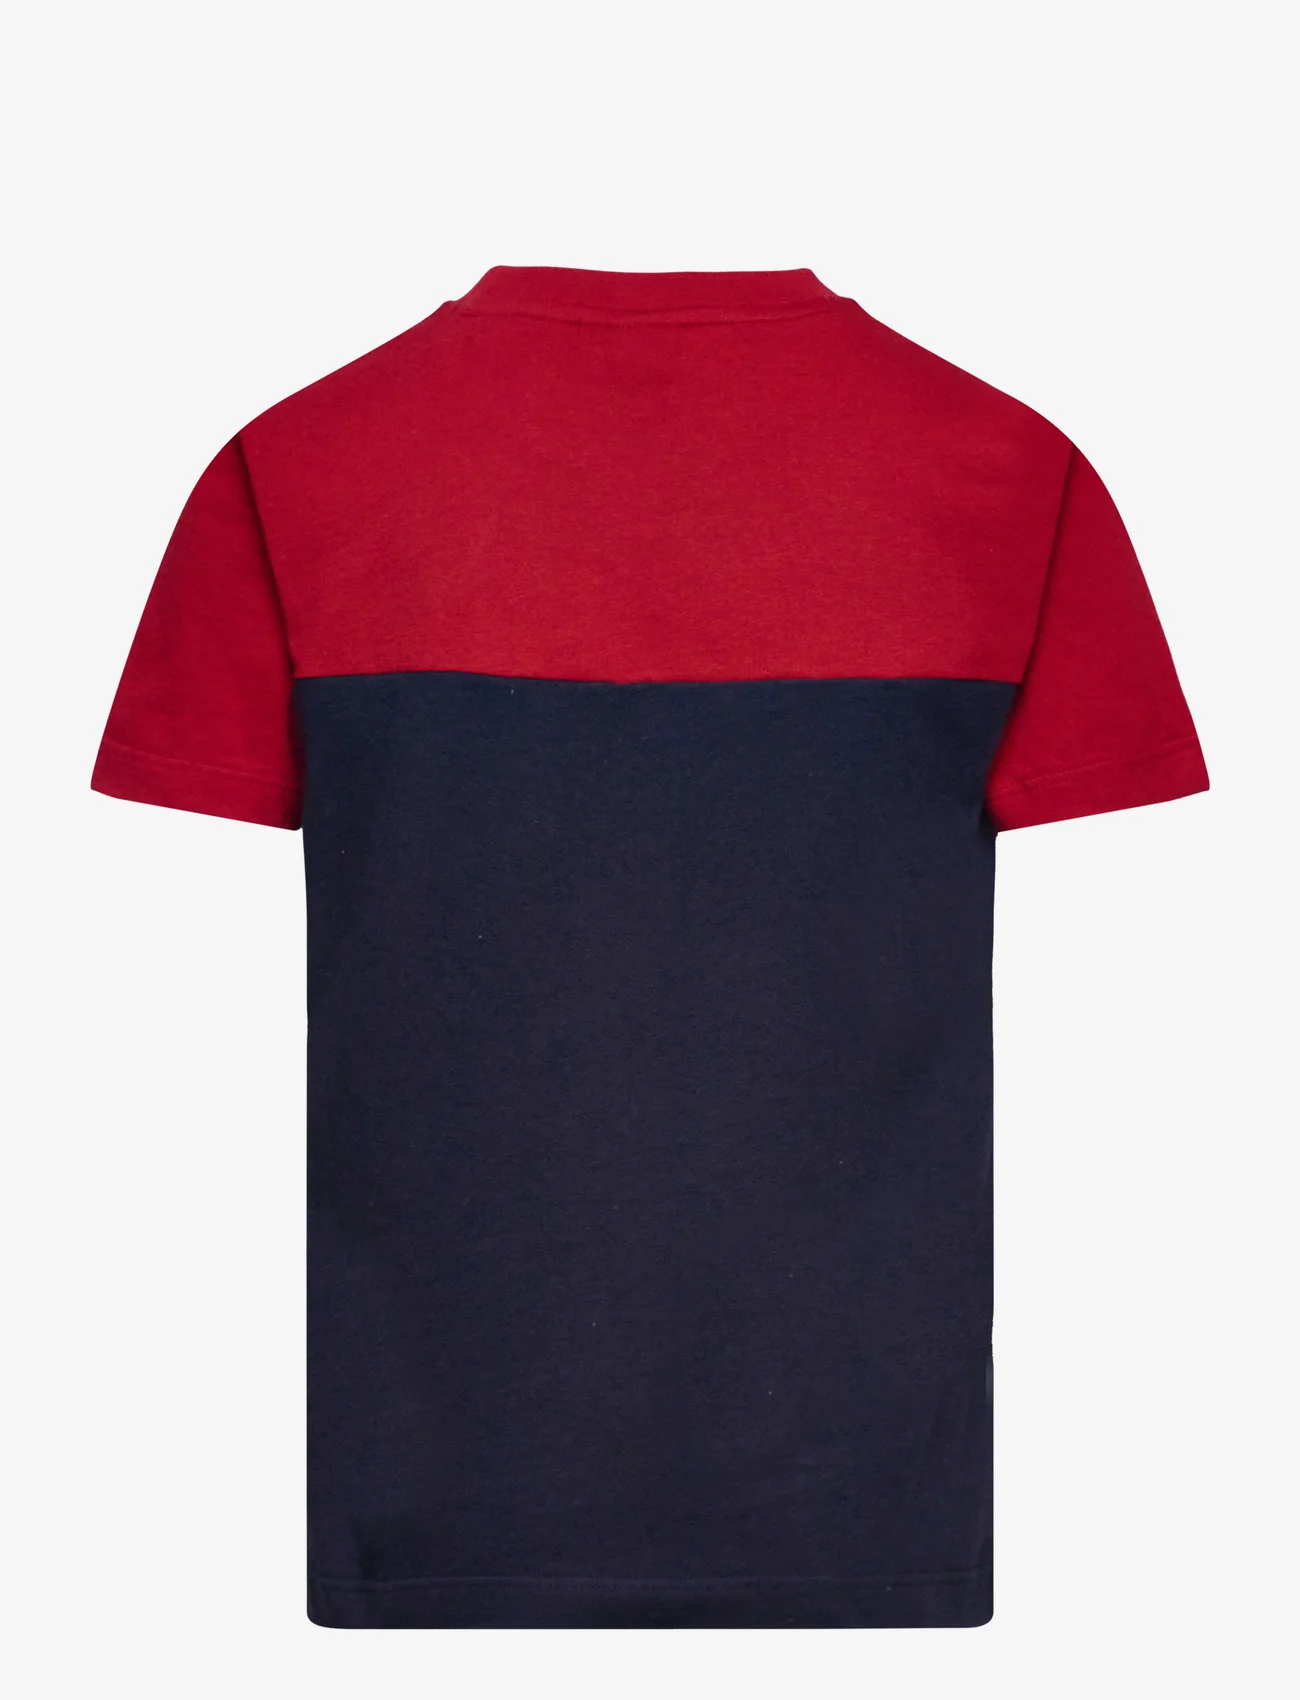 Lacoste - TEE-SHIRT&TURTLE - kortärmade t-shirts - ora/navy blue - 1